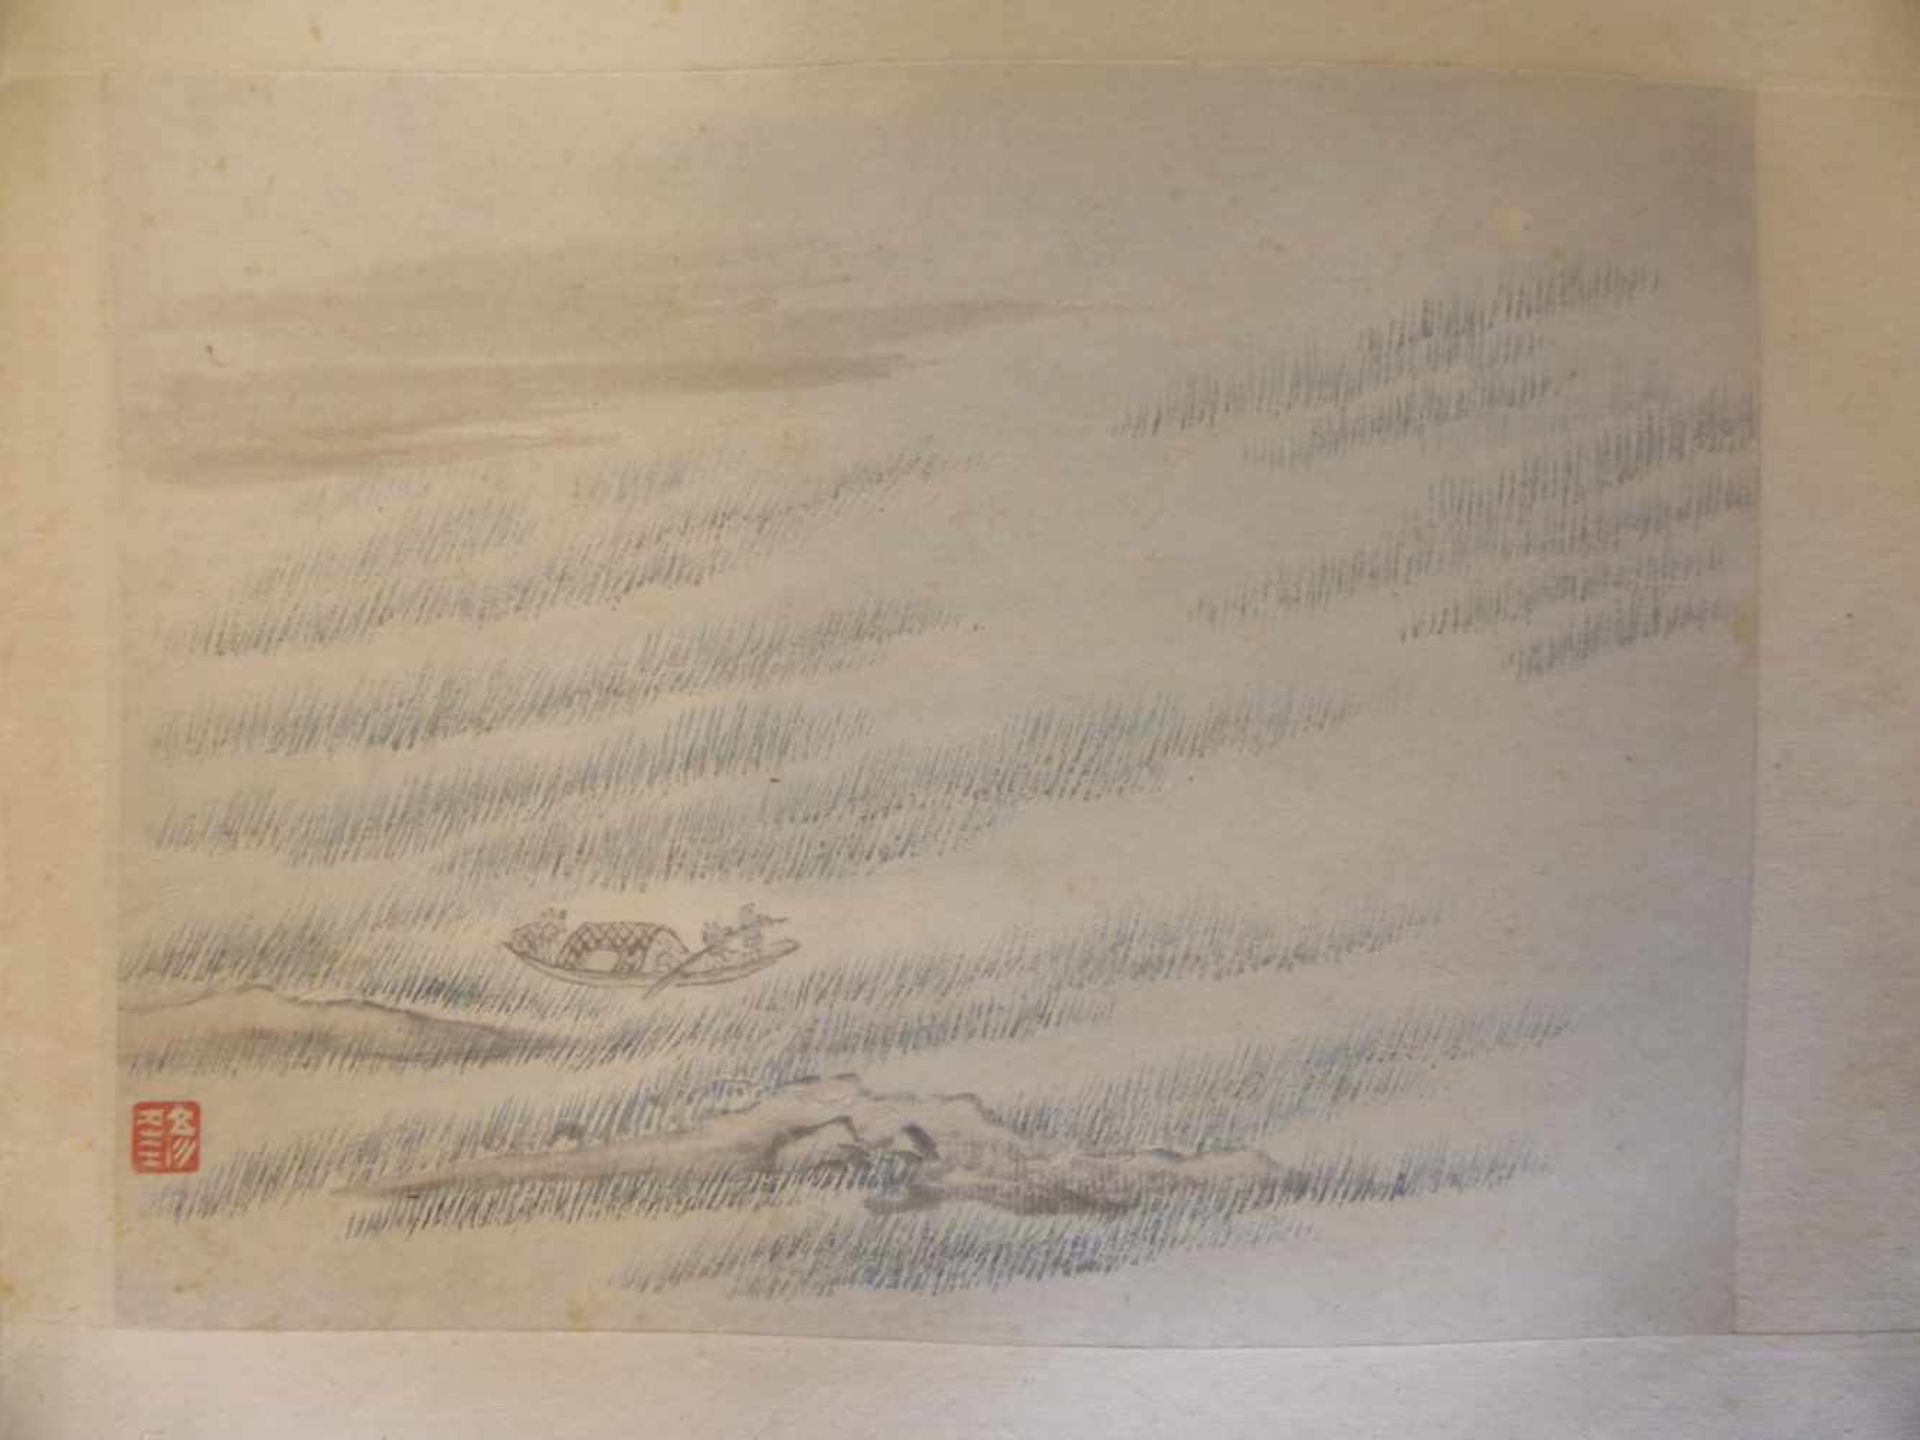 LI, YANKUI1840 - 1913. Water and mountain landscapes. China. Qing dynasty. 19th c. Leporello - Bild 8 aus 13